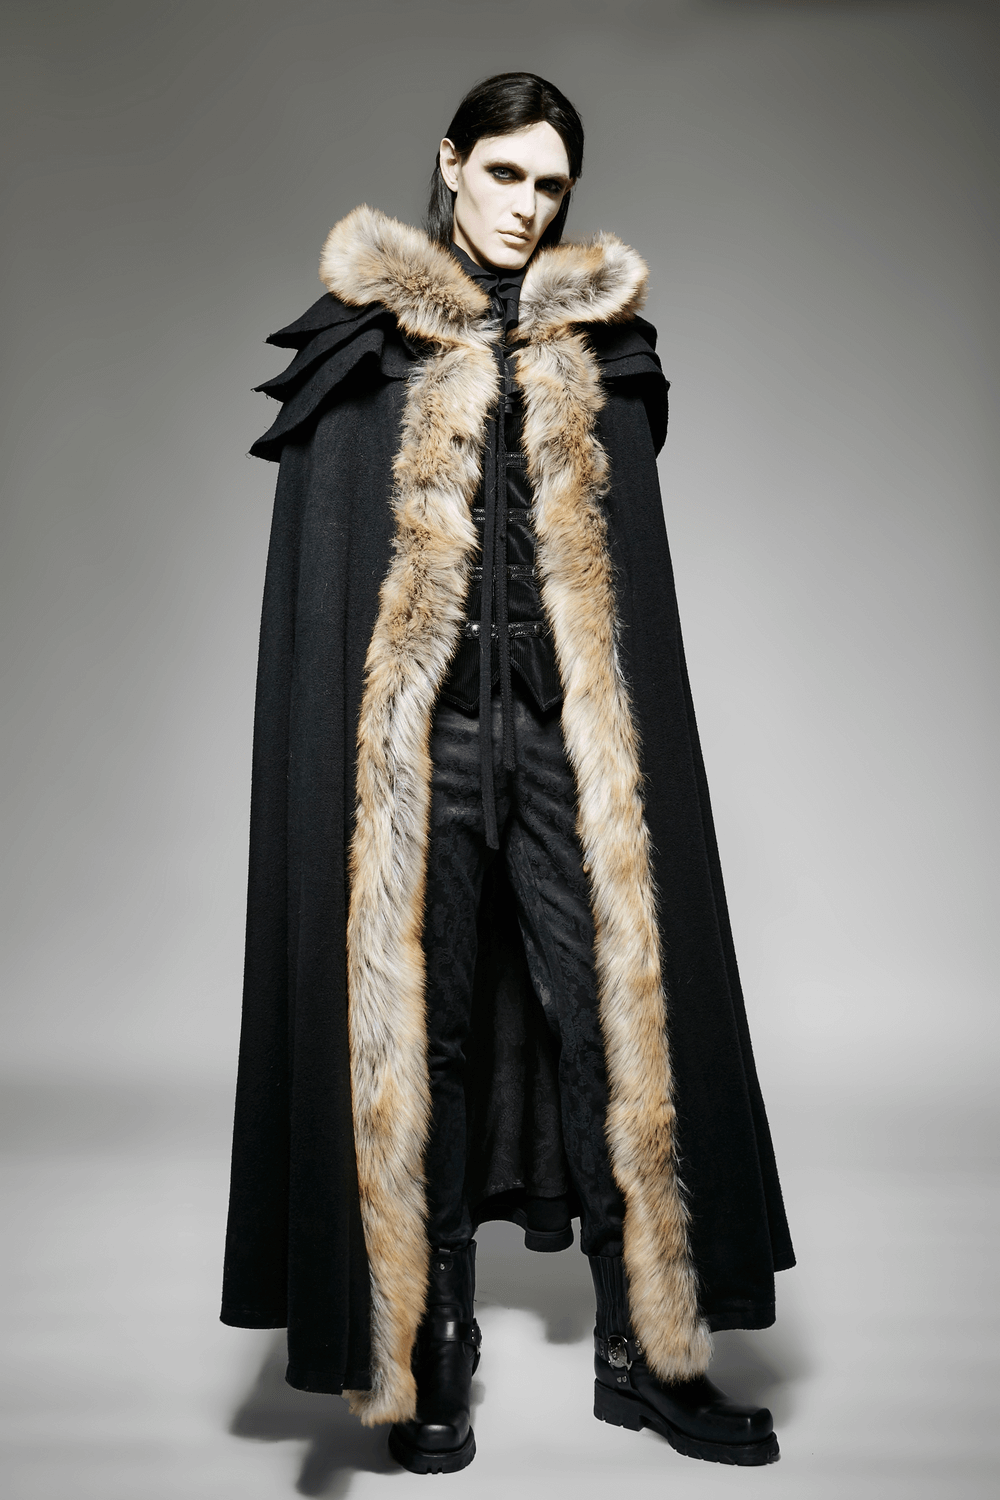 Sophisticated Black Gothic Cloak with Faux Fur Trim - HARD'N'HEAVY